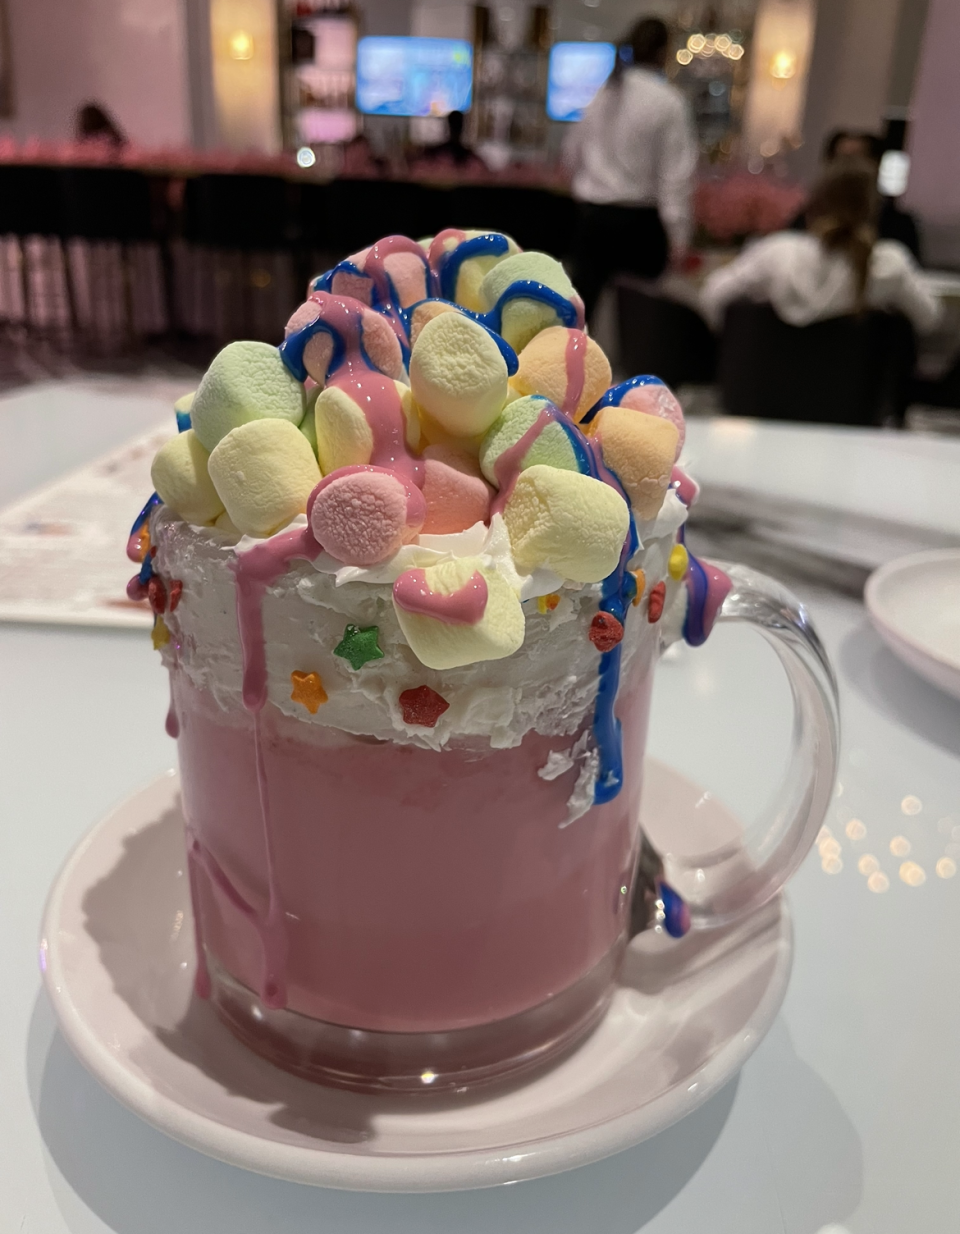 Pink Unicorn hot chocolate at Sugar Factory.